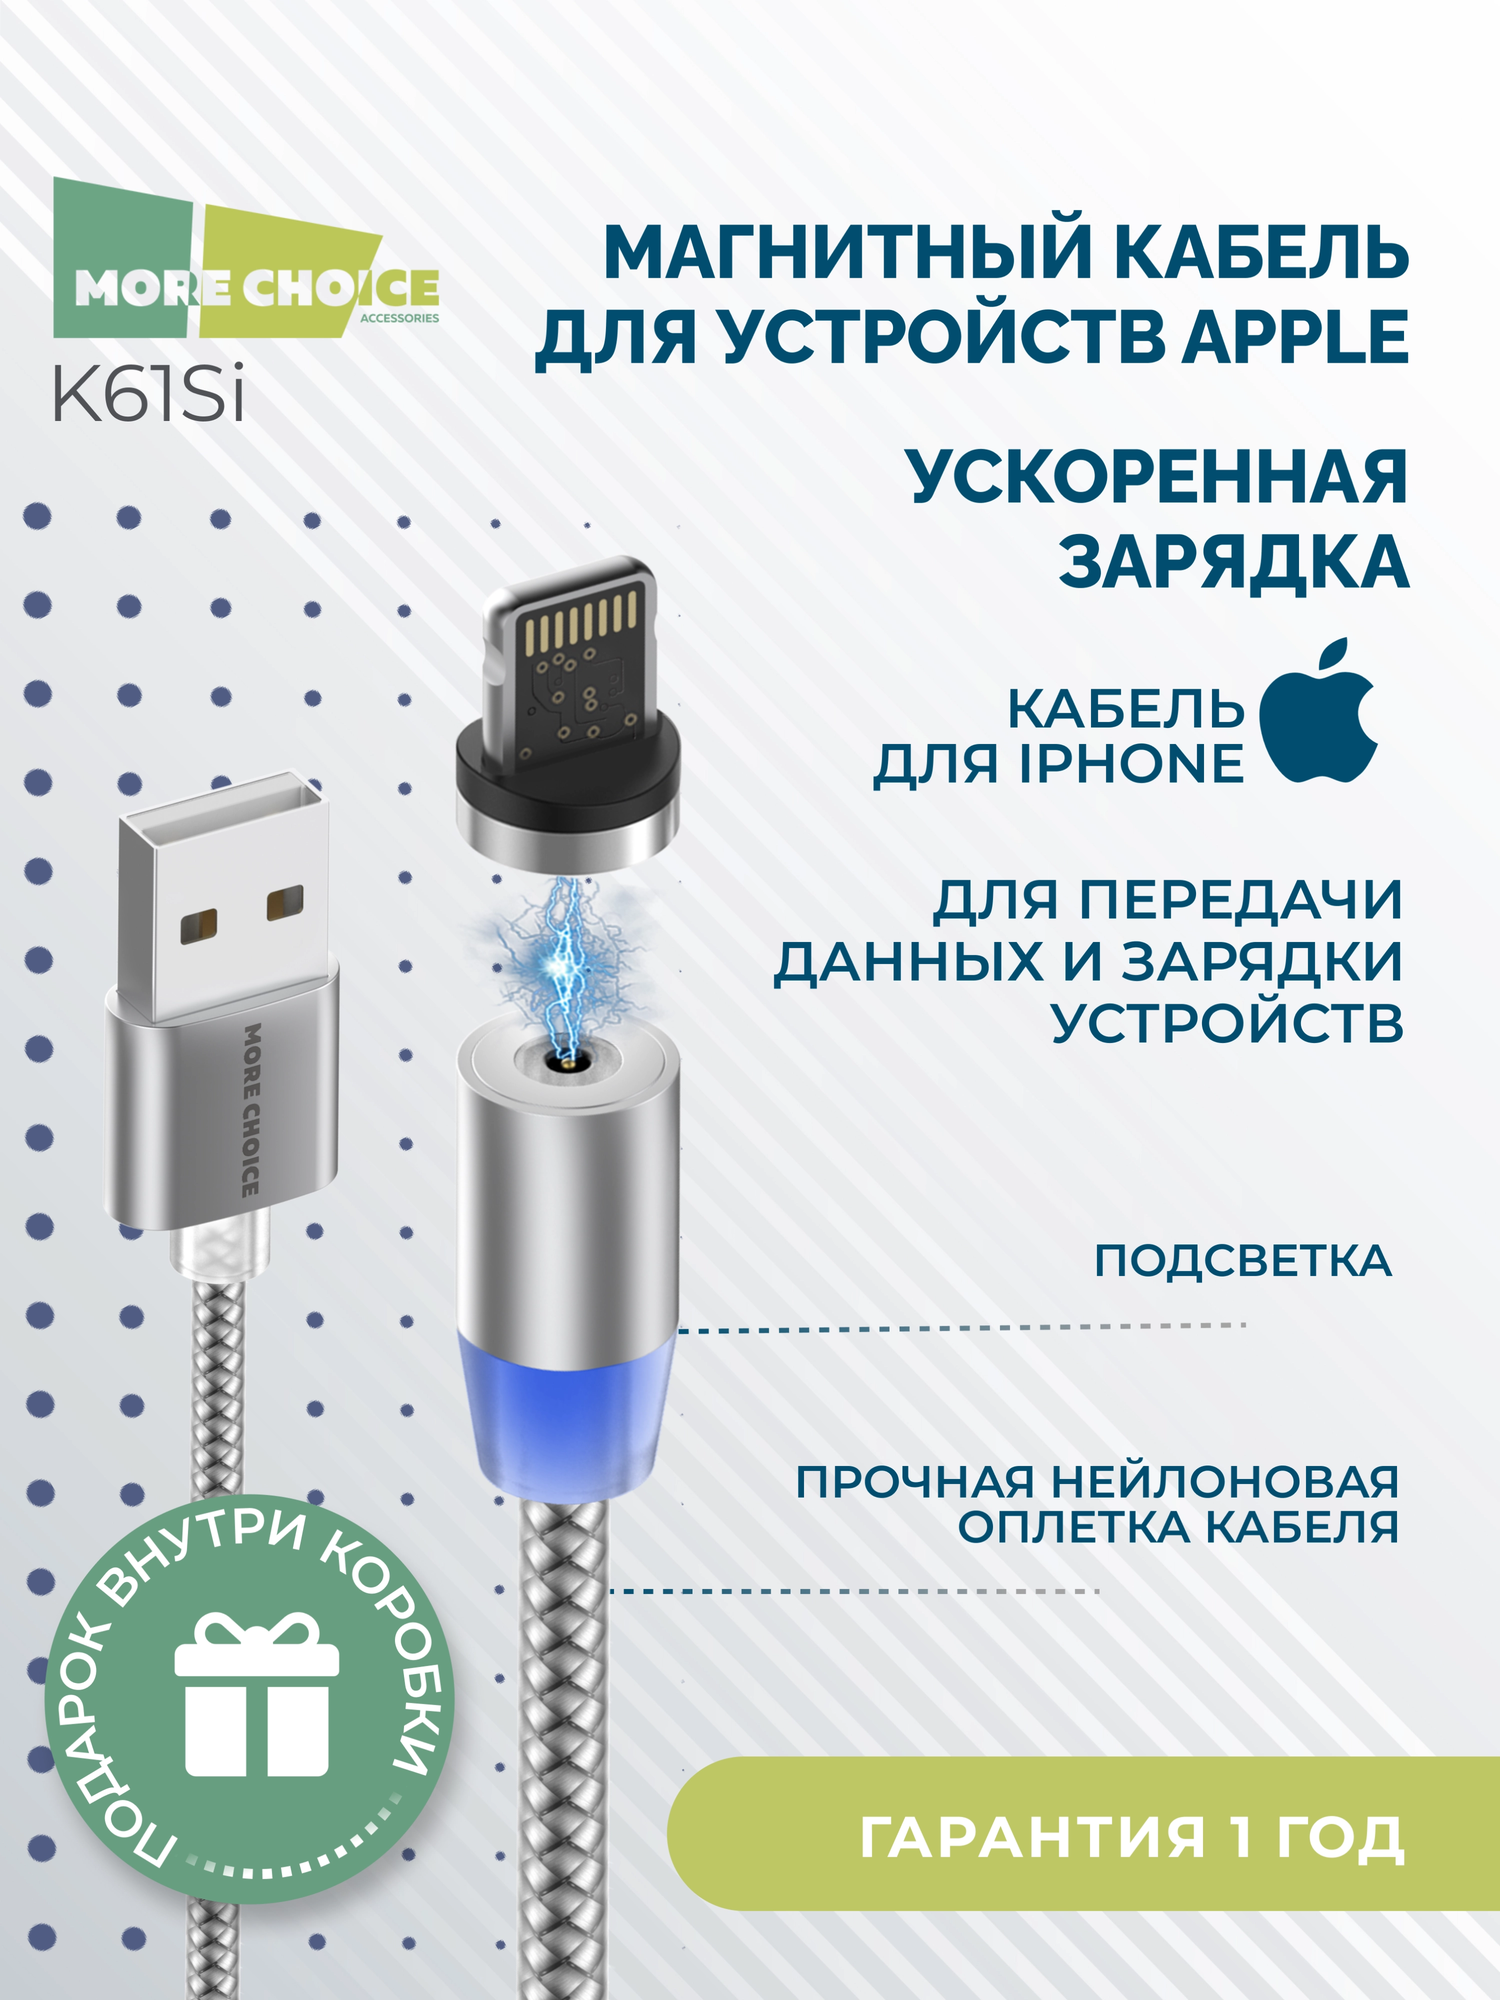 Дата-кабель Smart USB 2.4A для Lightning 8-pin Magnetic More choice K61Si нейлон 1м Dark Grey